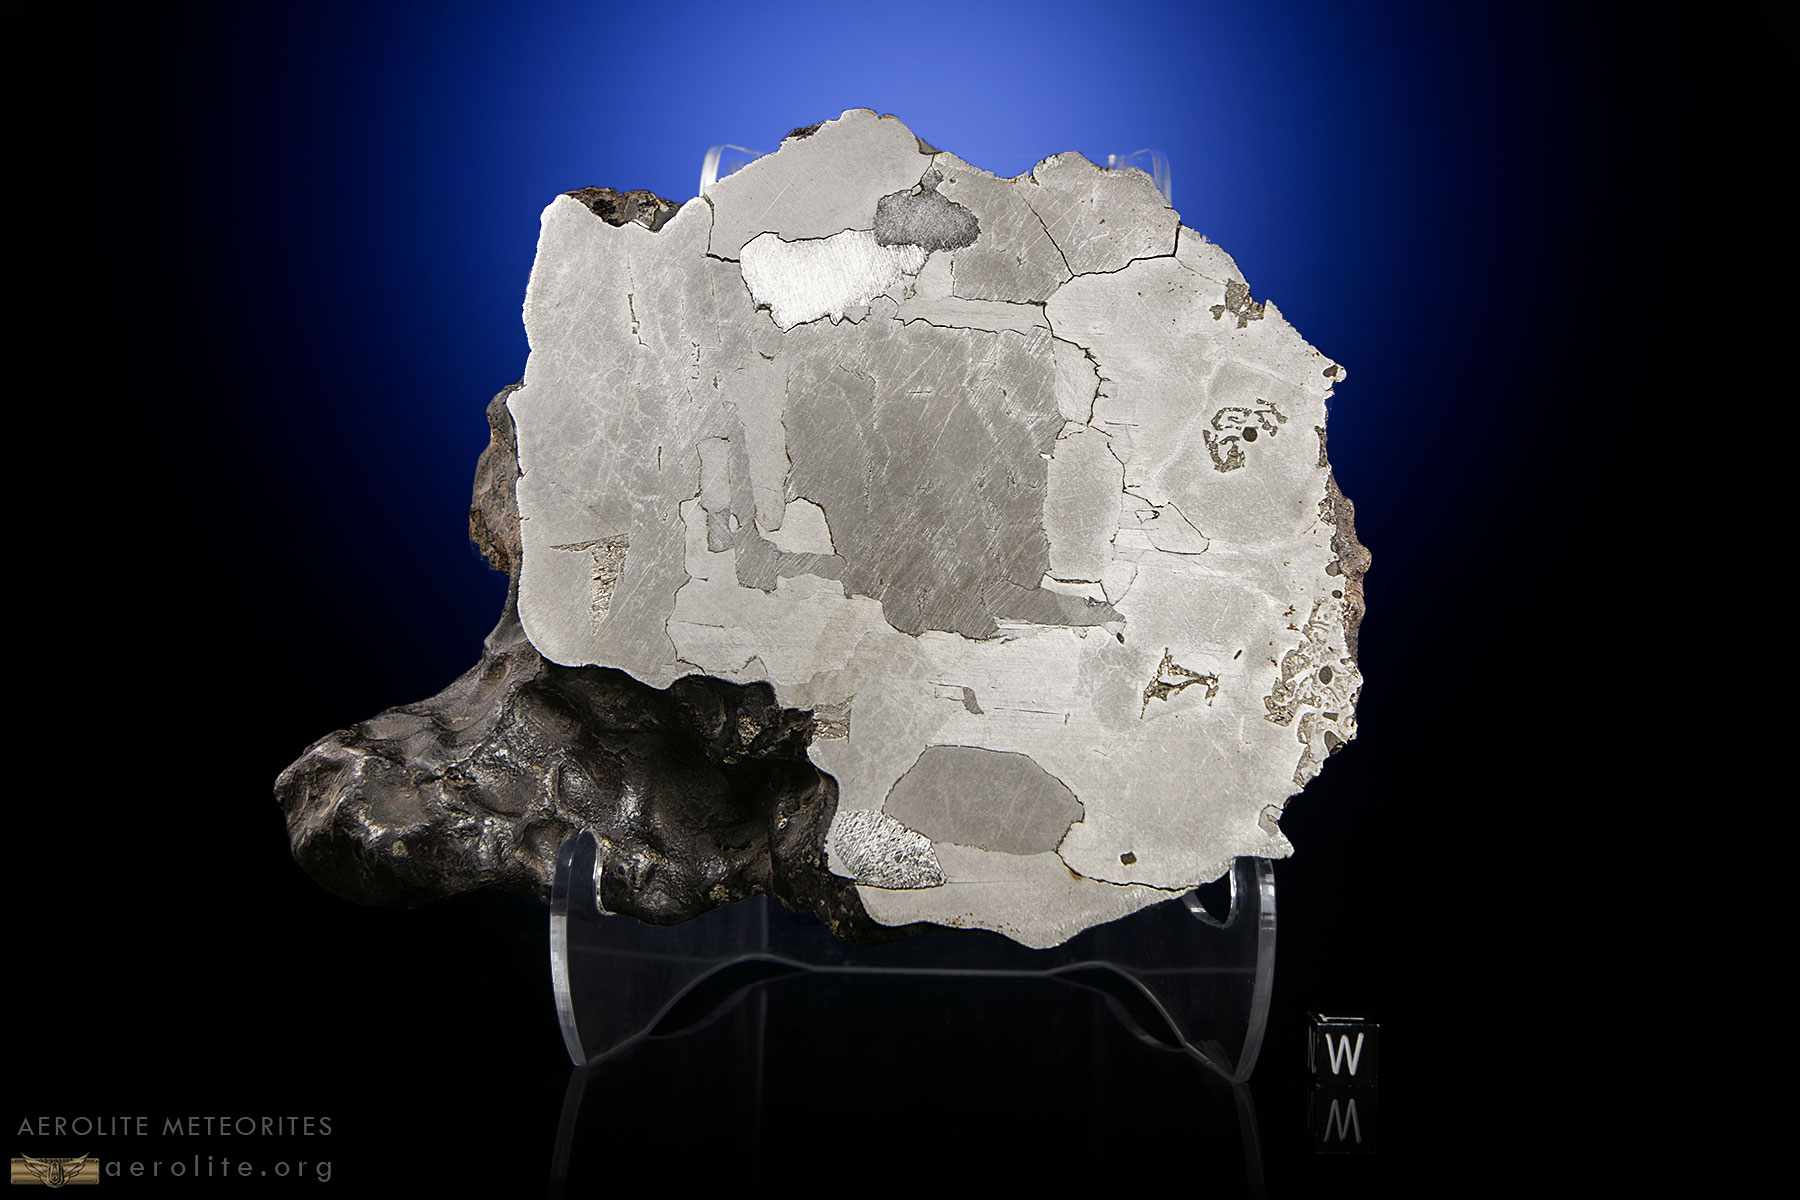 sikhote alin iron meteorite